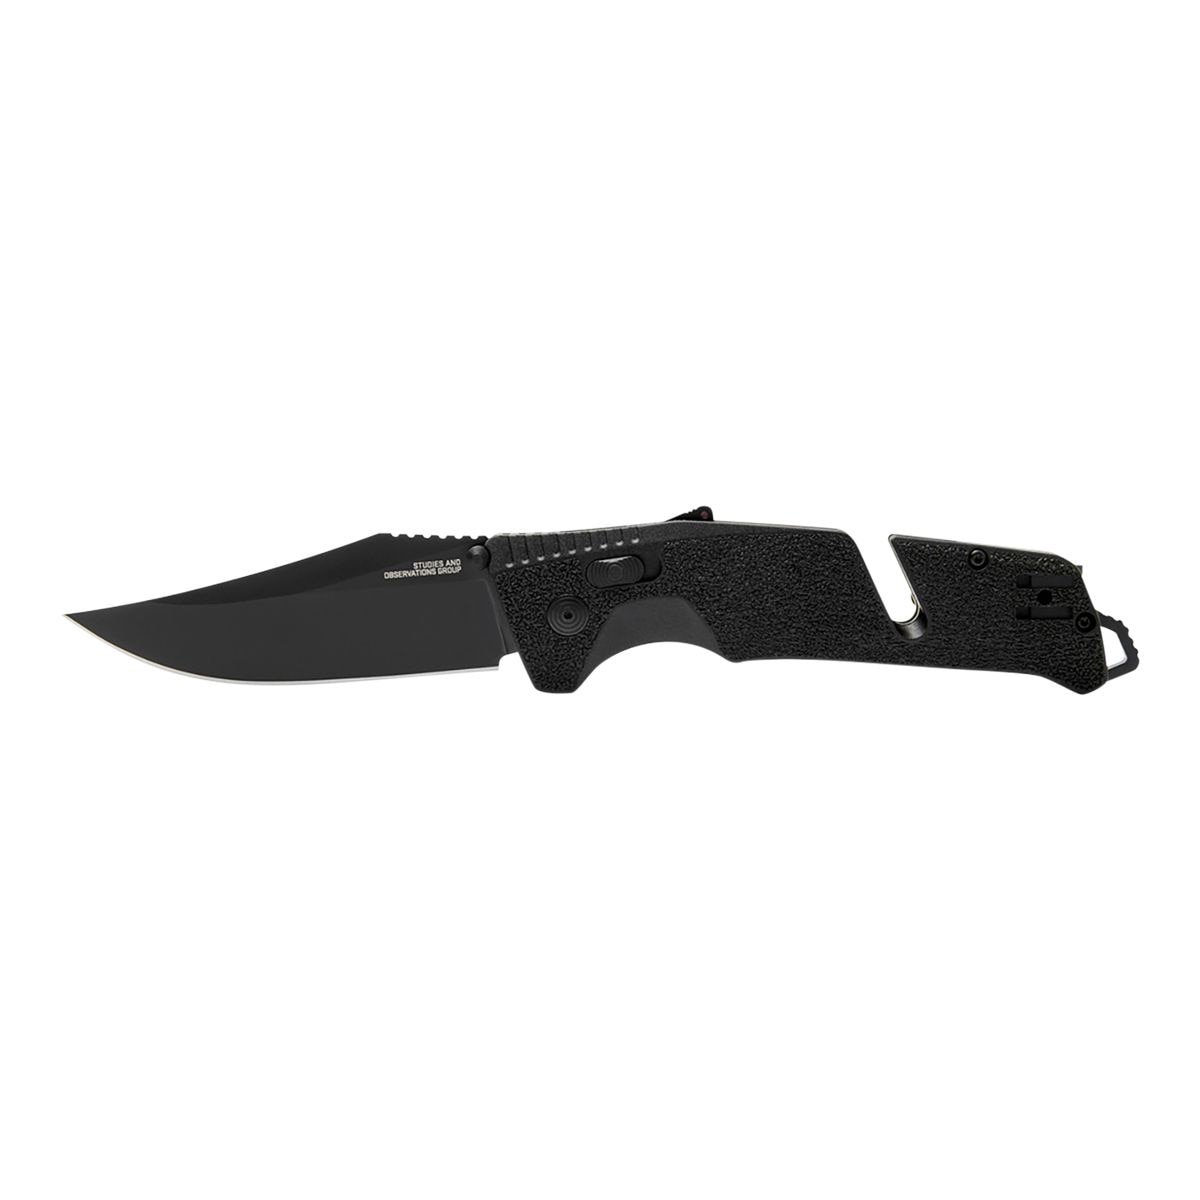 Image of SOG Trident MK3 Folding Knife